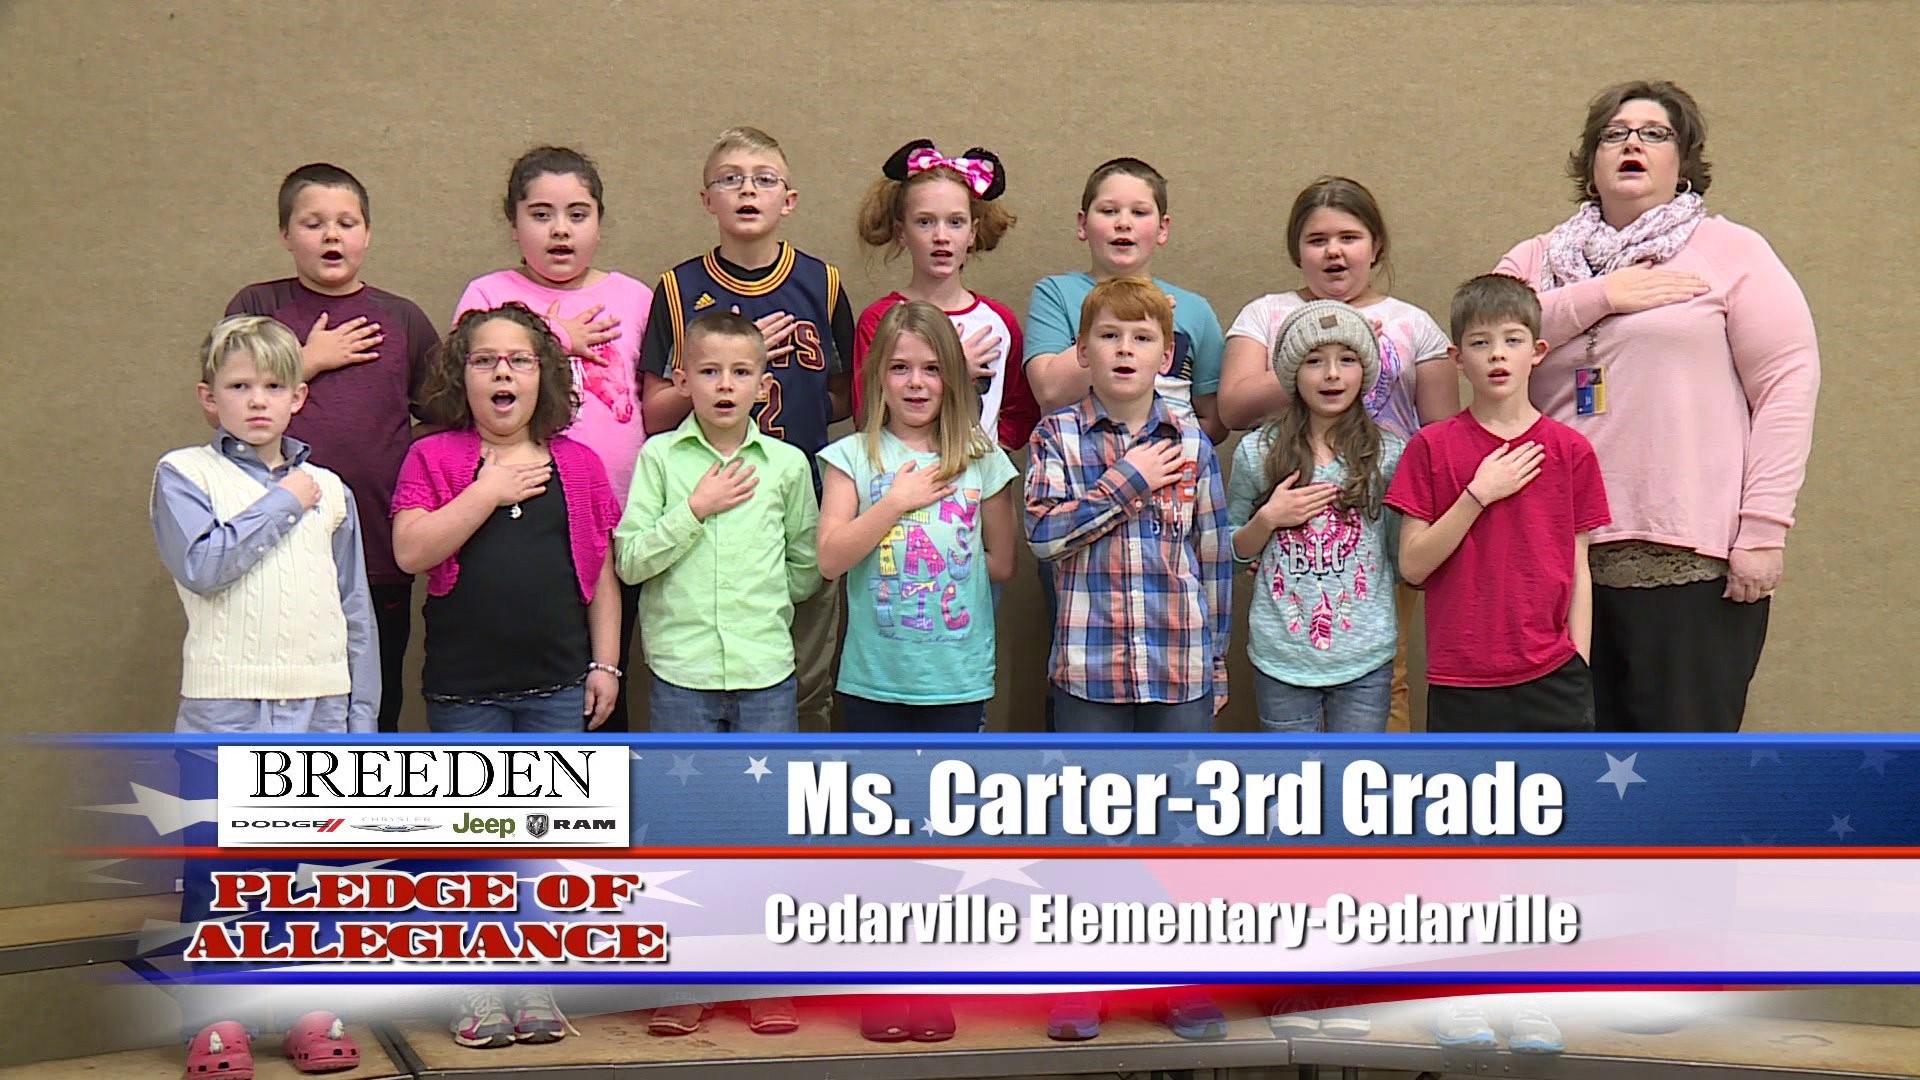 Cedarville Elementary, Cedarville - Ms. Carter - 3rd Grade